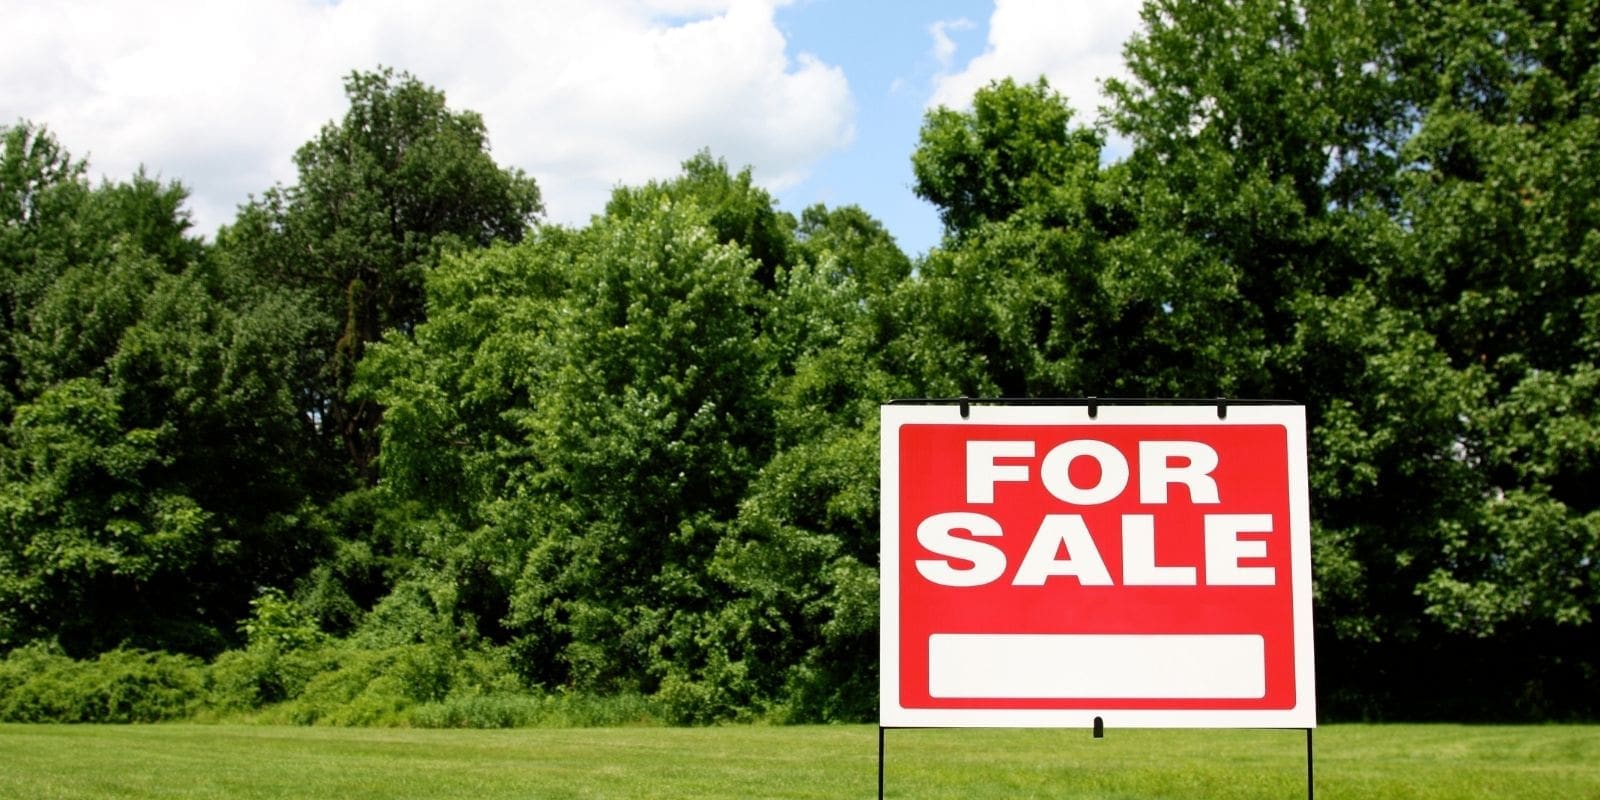 Lot for Sale | Ottawa Property Shop